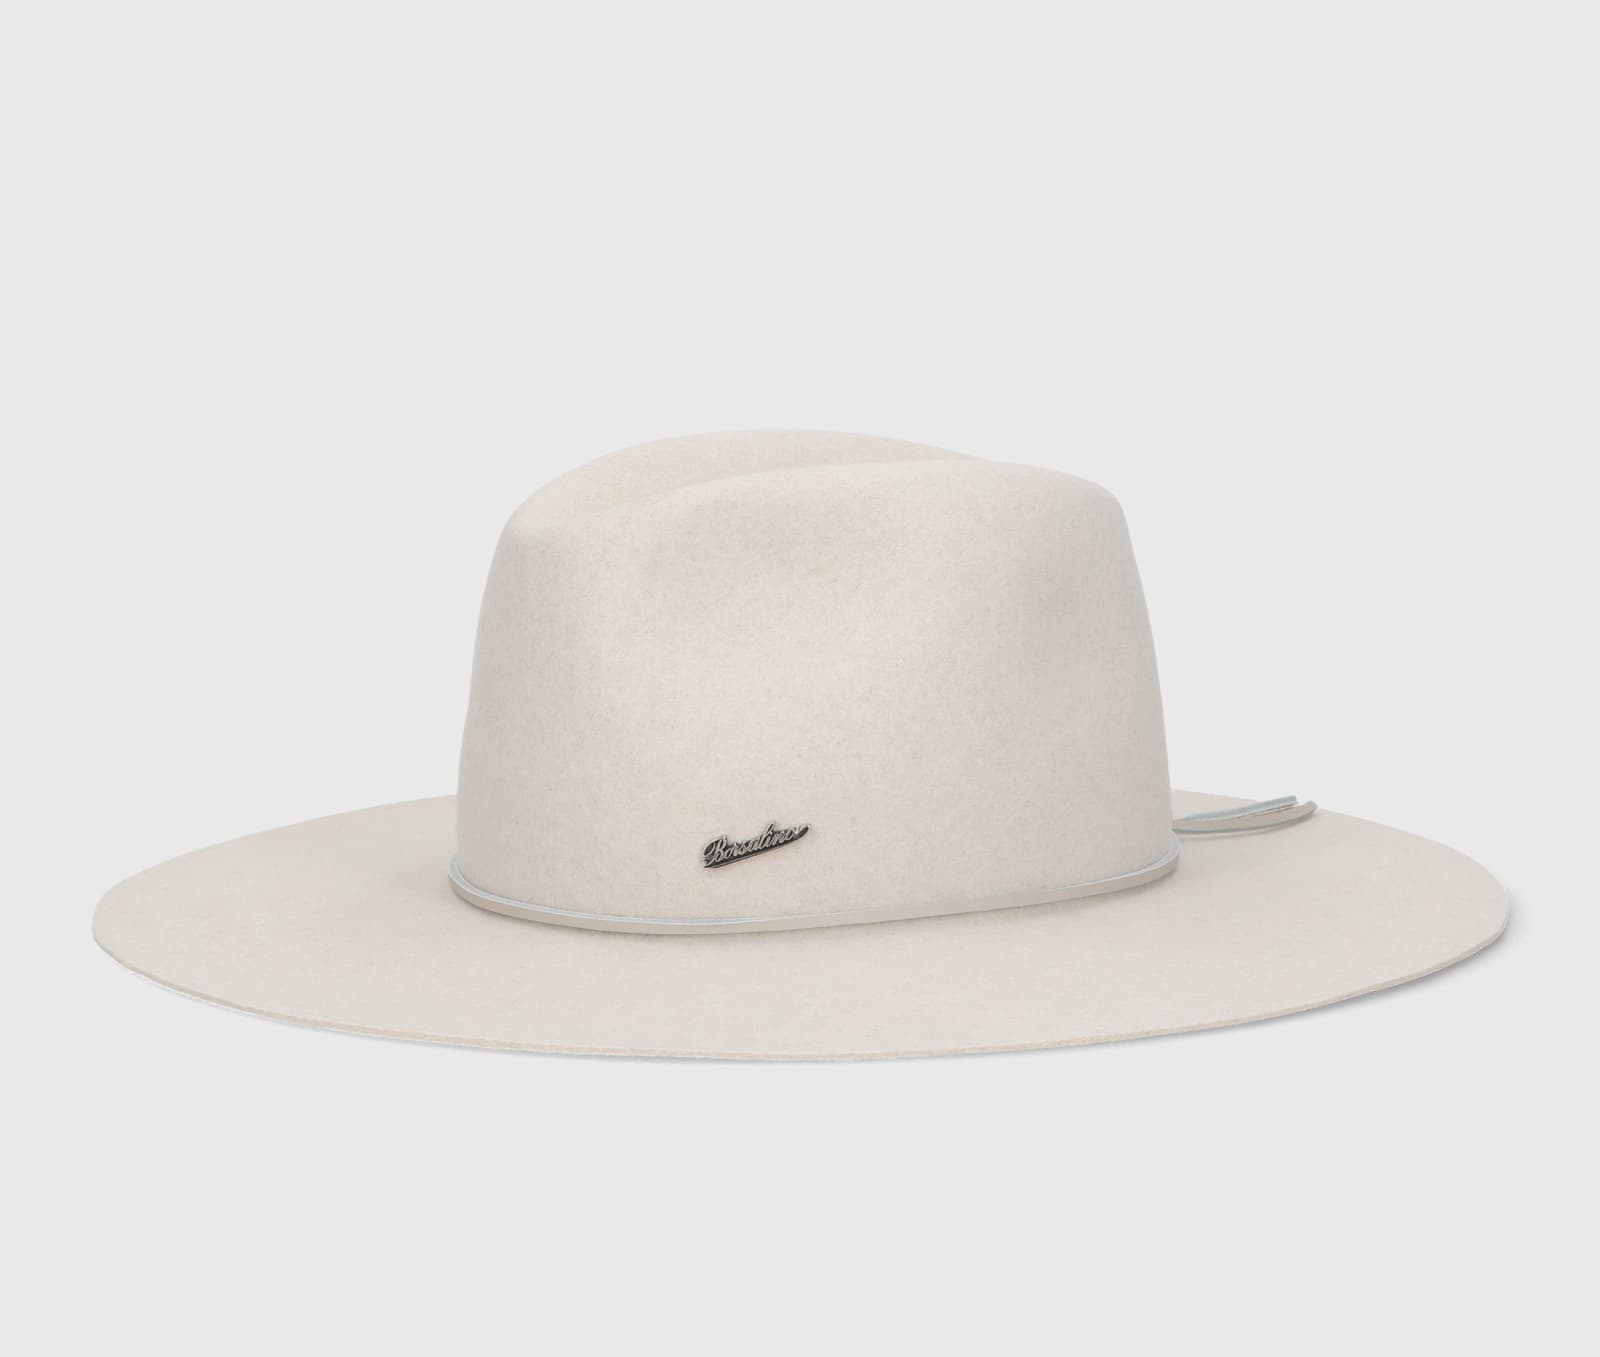 Borsalino Heath Alessandria Brushed Felt Leather Hatband In Beige